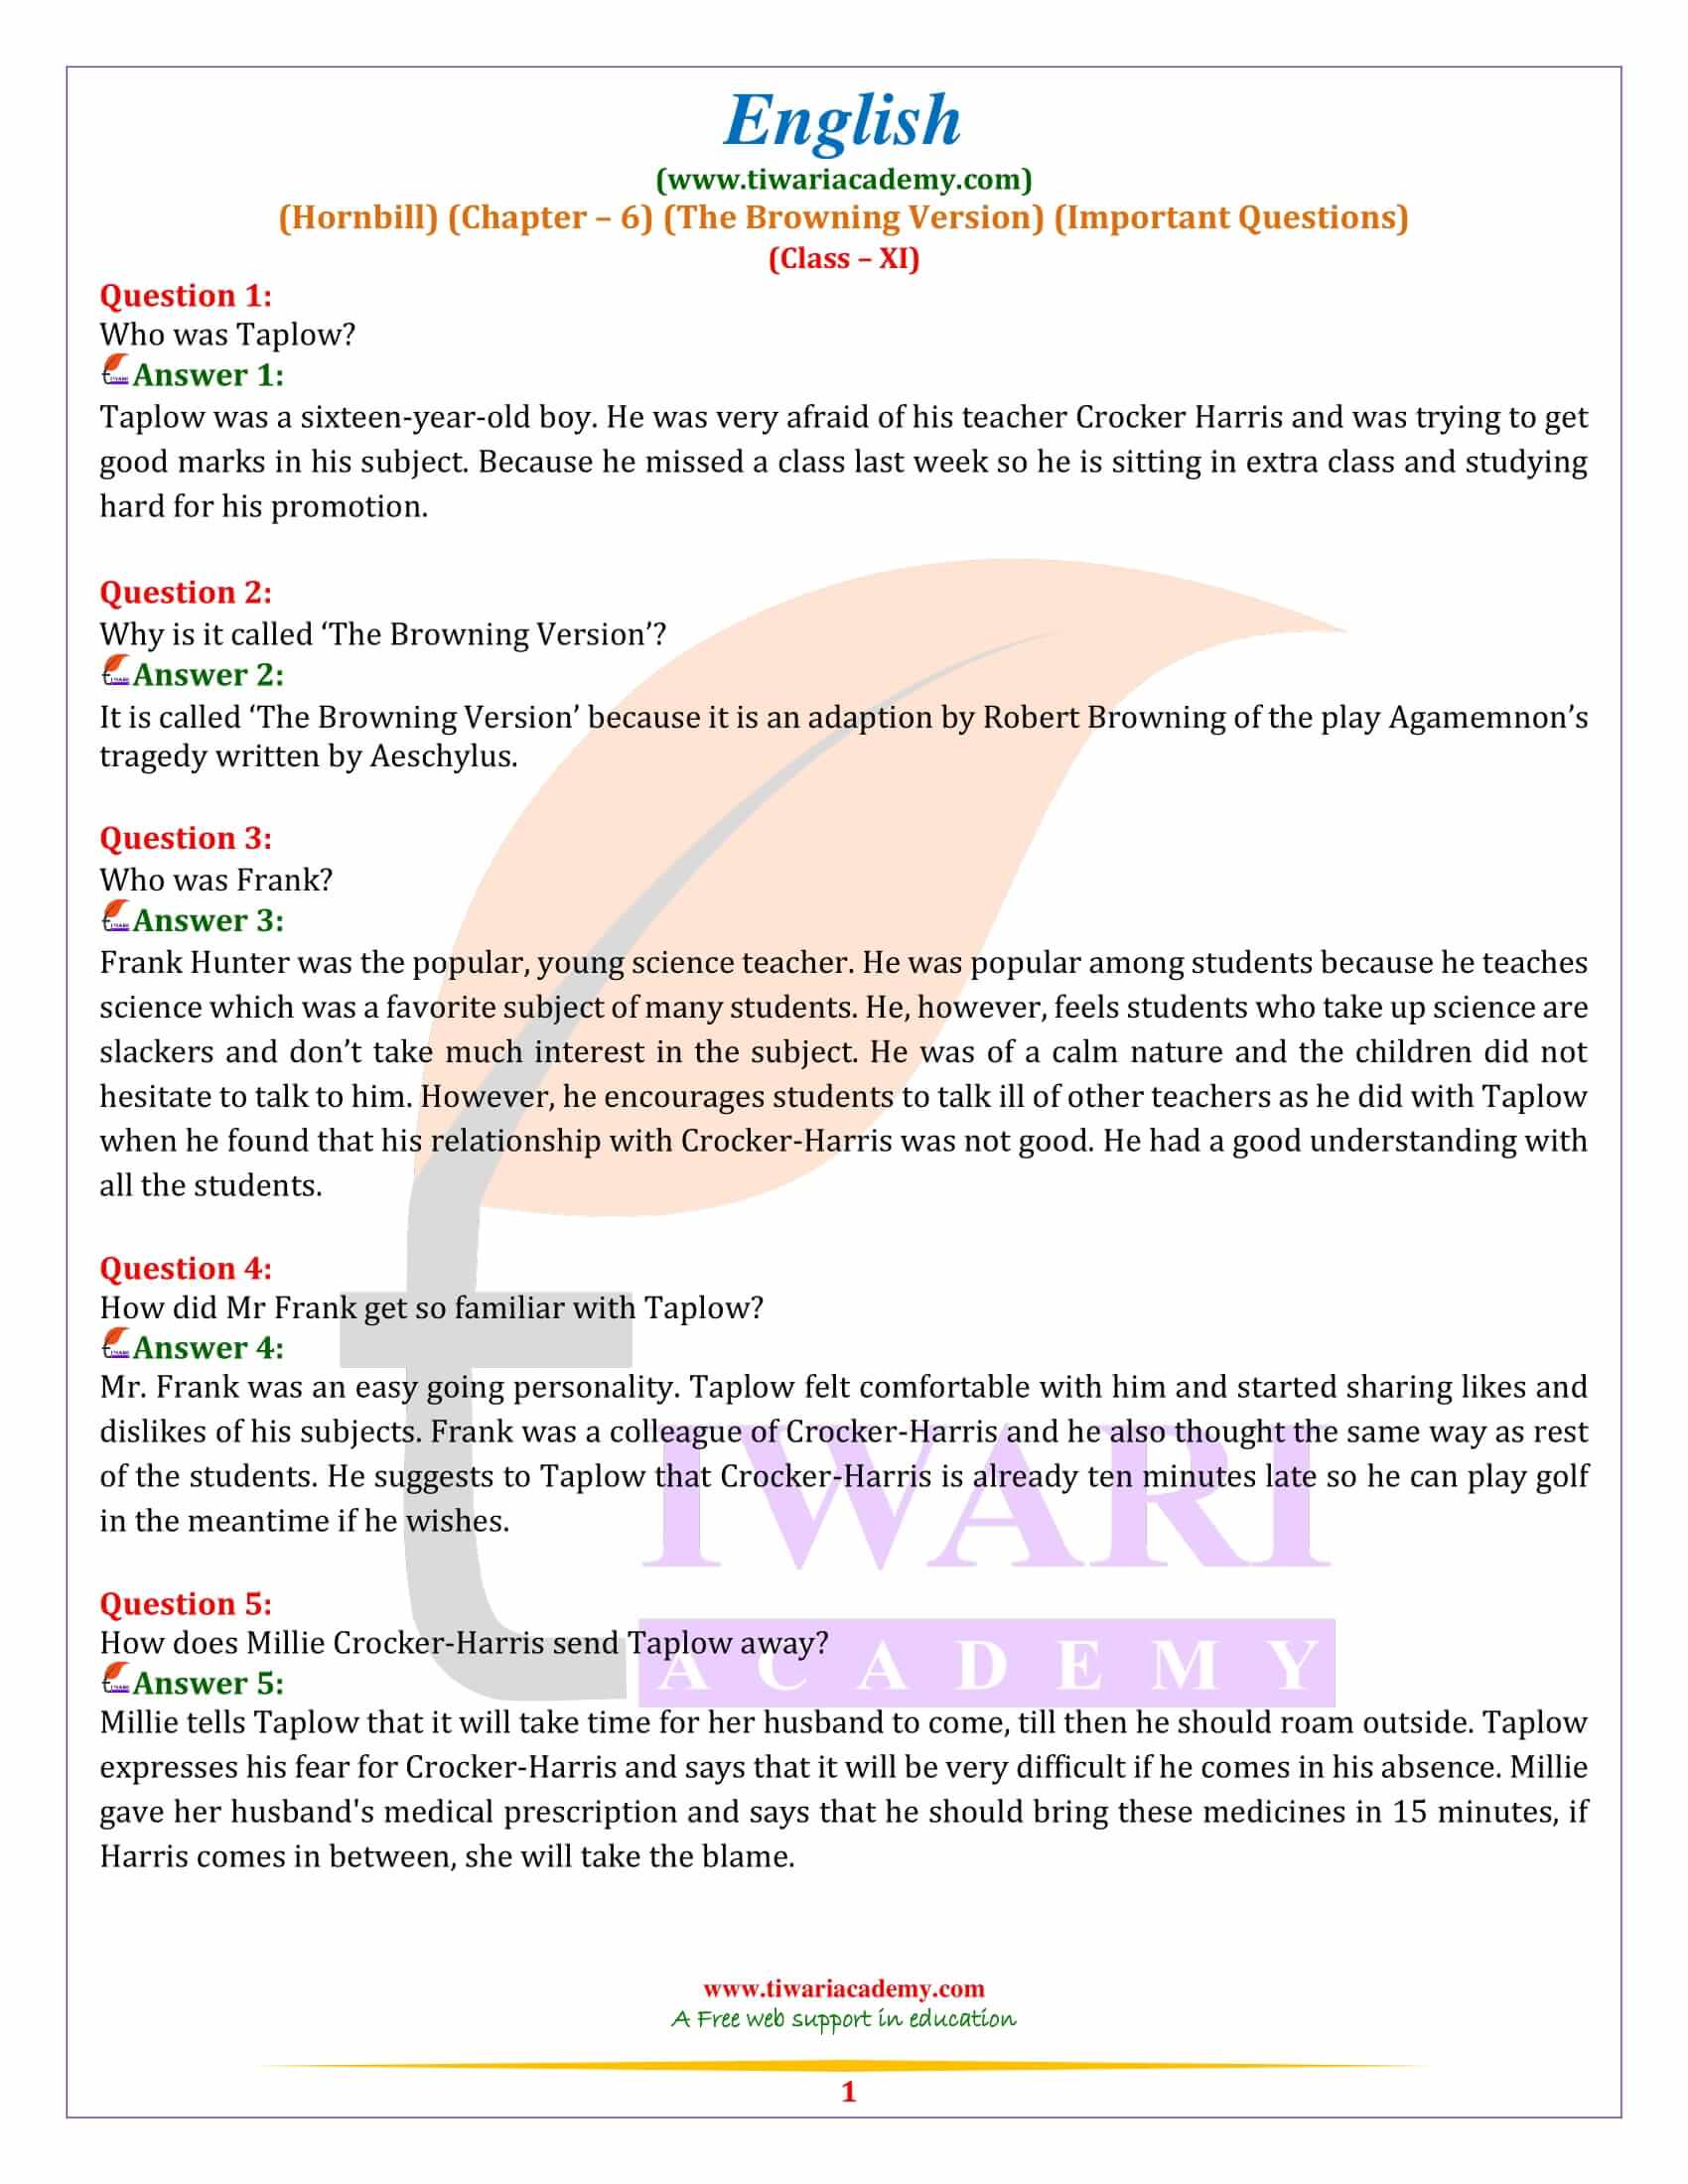 Class 11 English Hornbill Chapter 6 Extra Questions